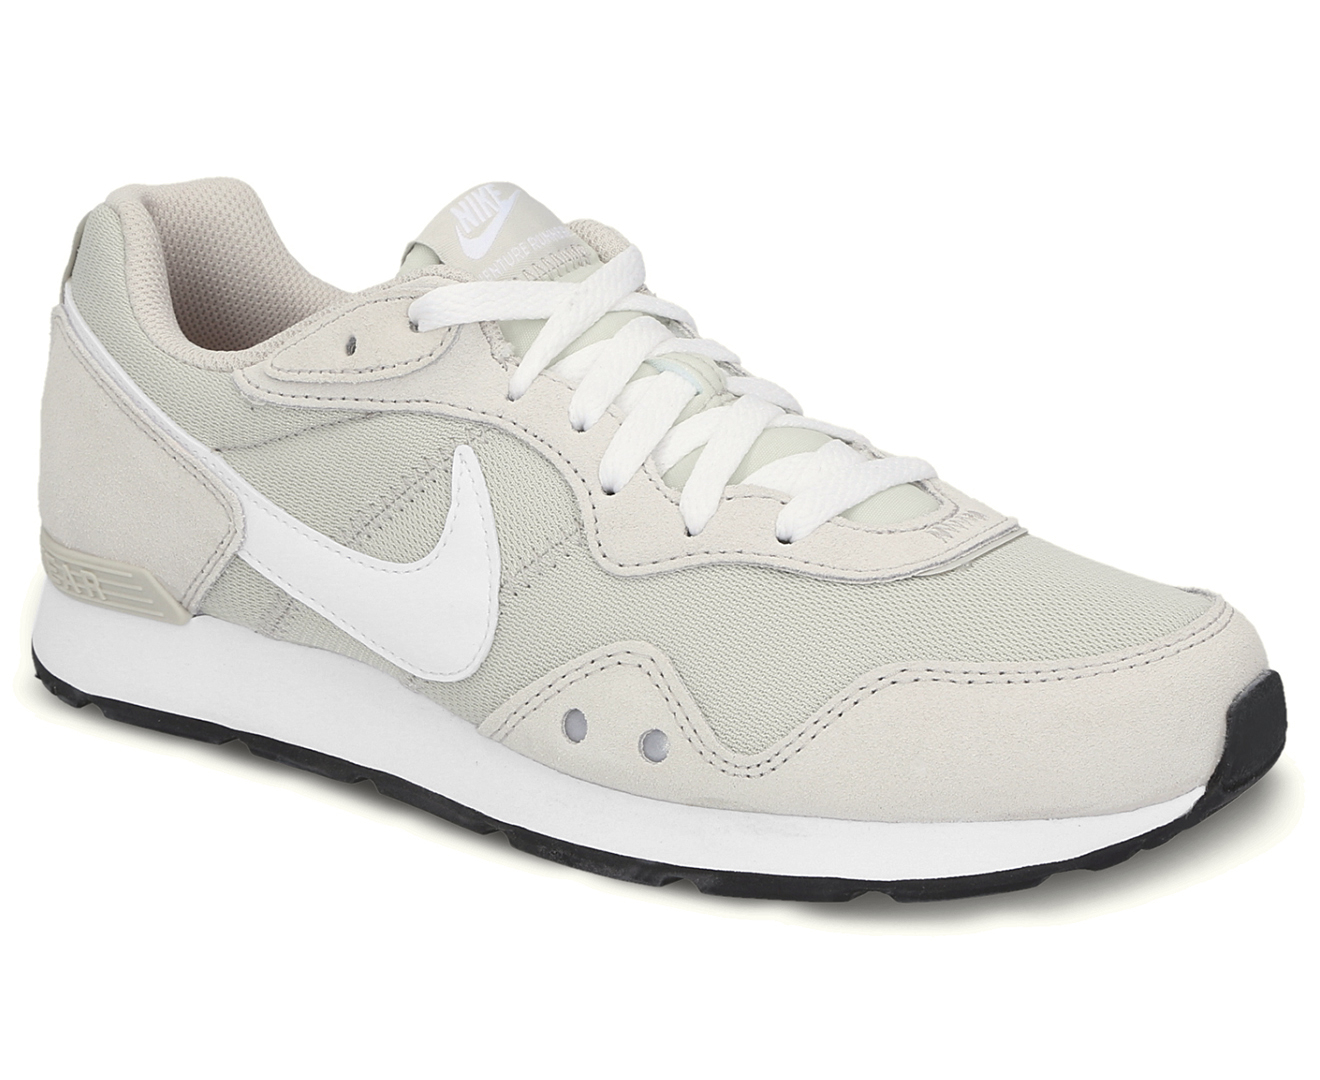 Nike Women's Venture Runner Shoe - Light Bone/White | Catch.co.nz